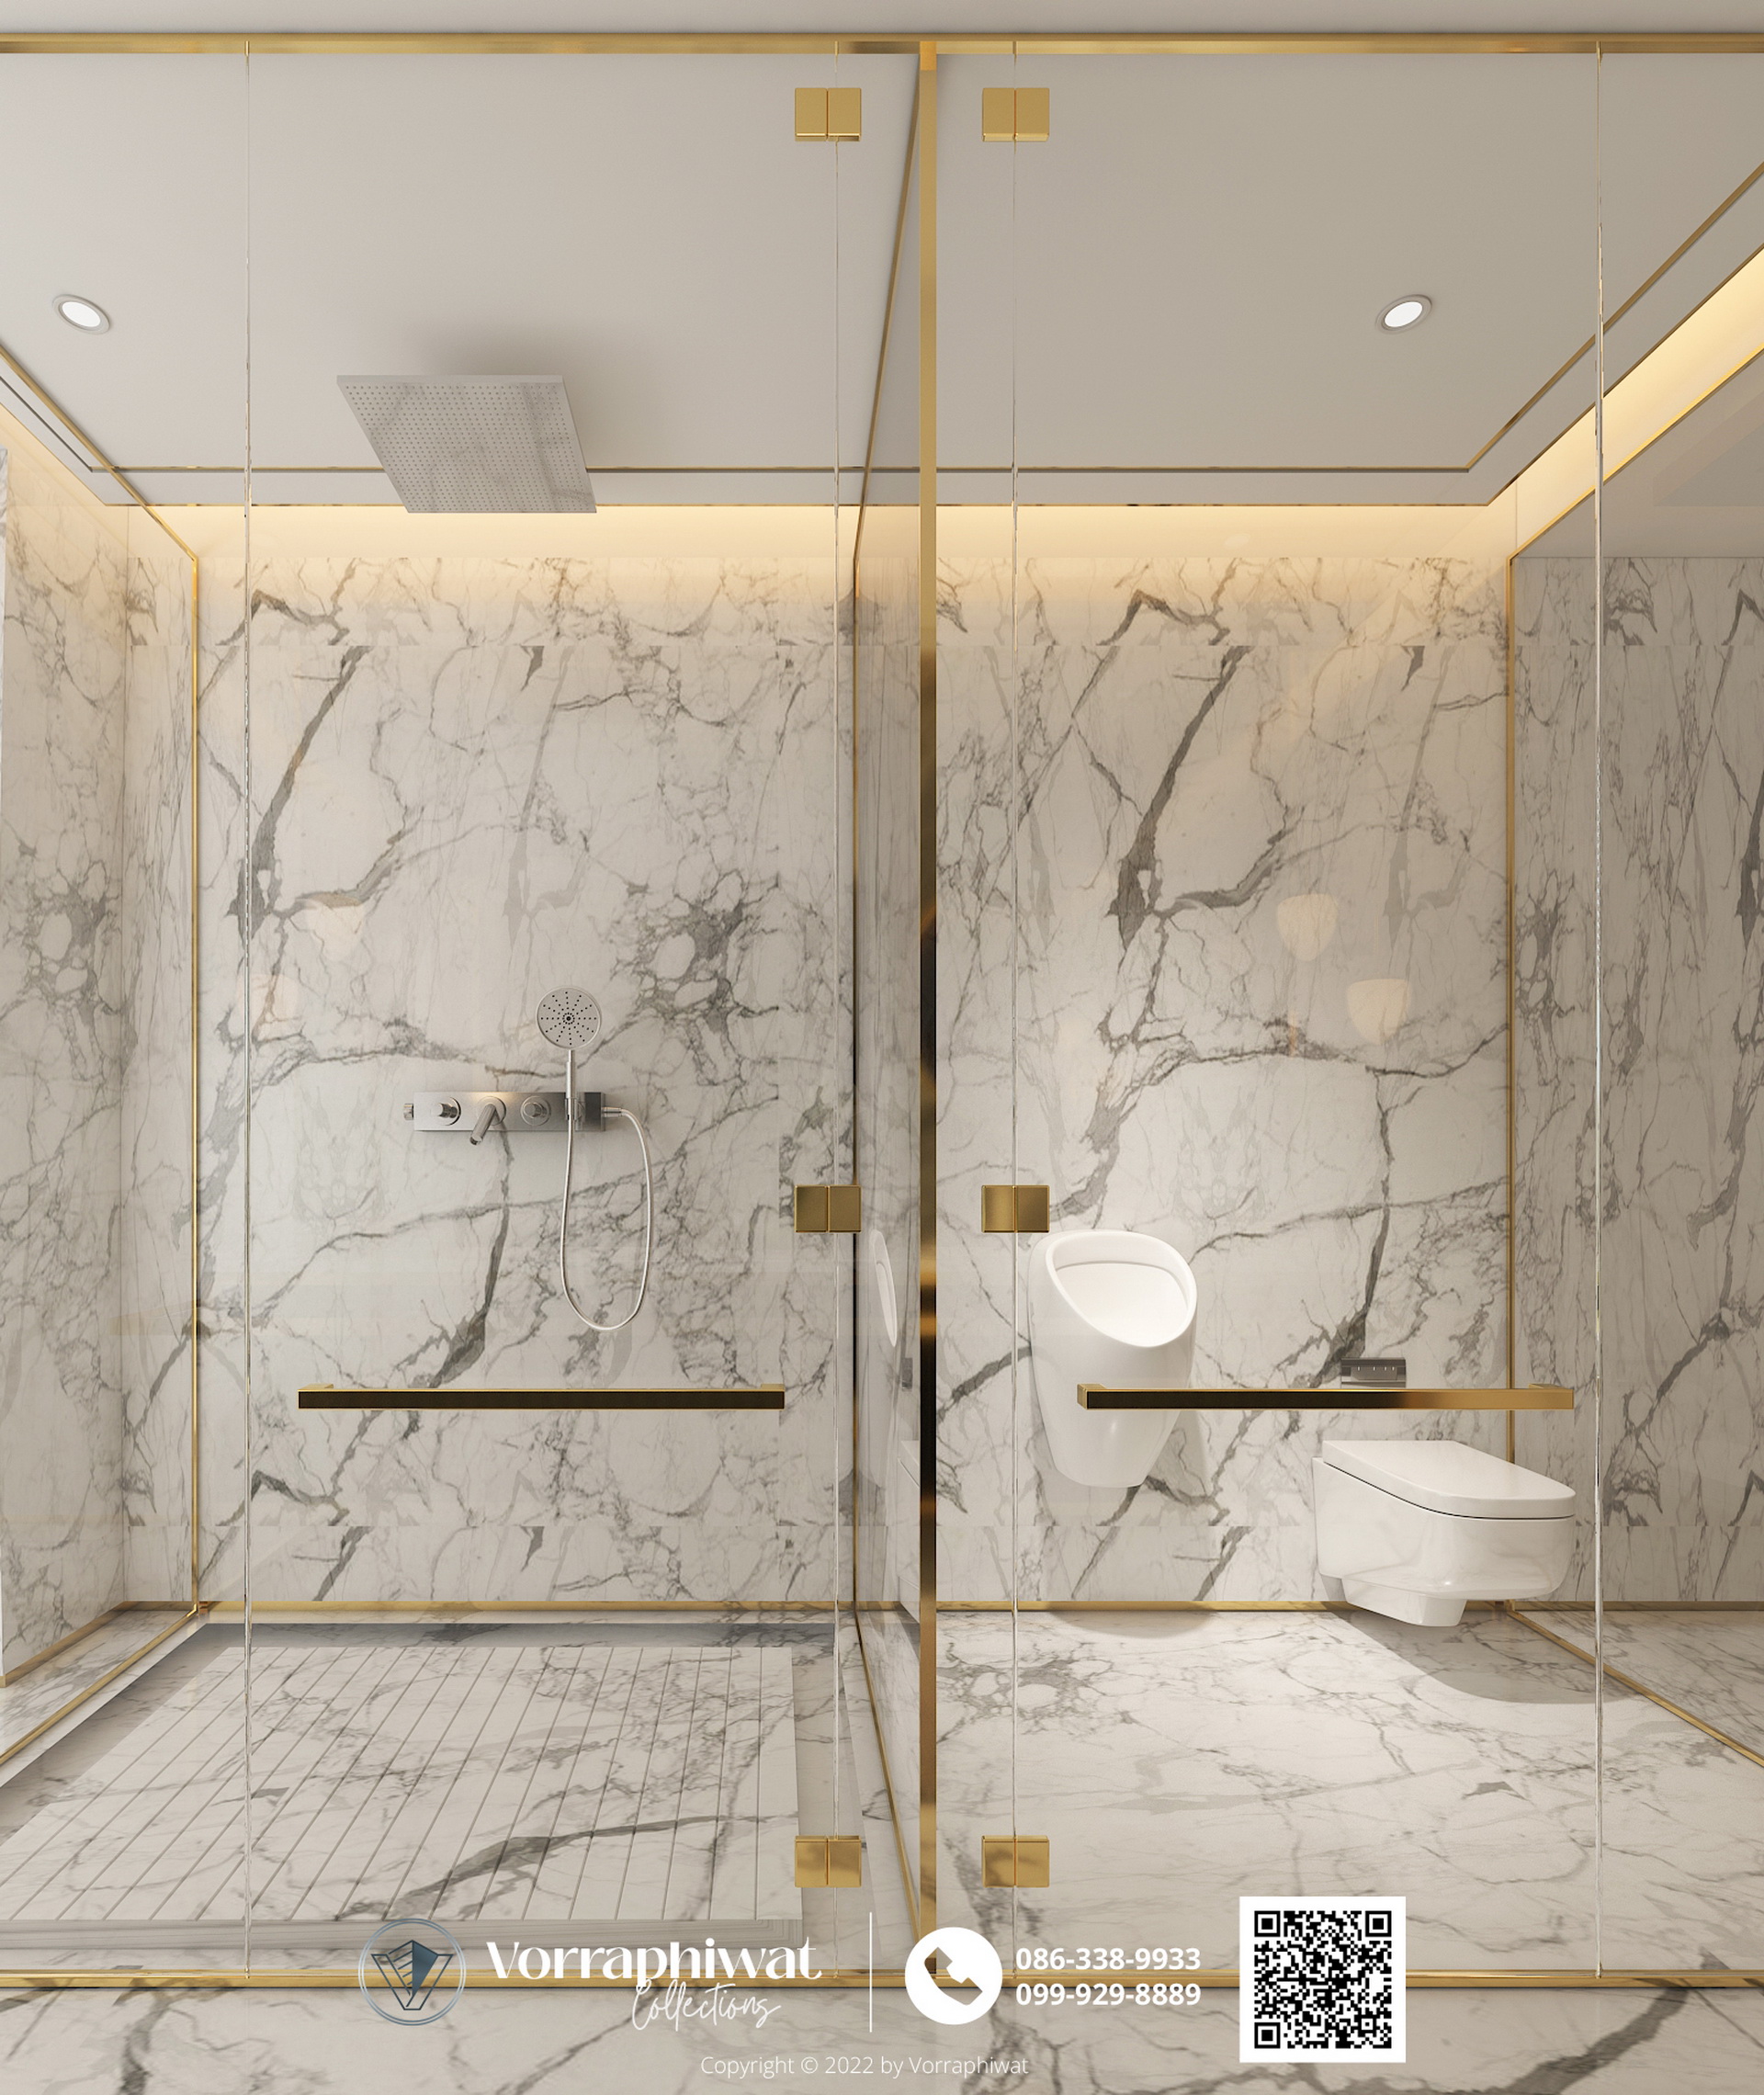 penthouse contemporary style - bathroom2 Signature05